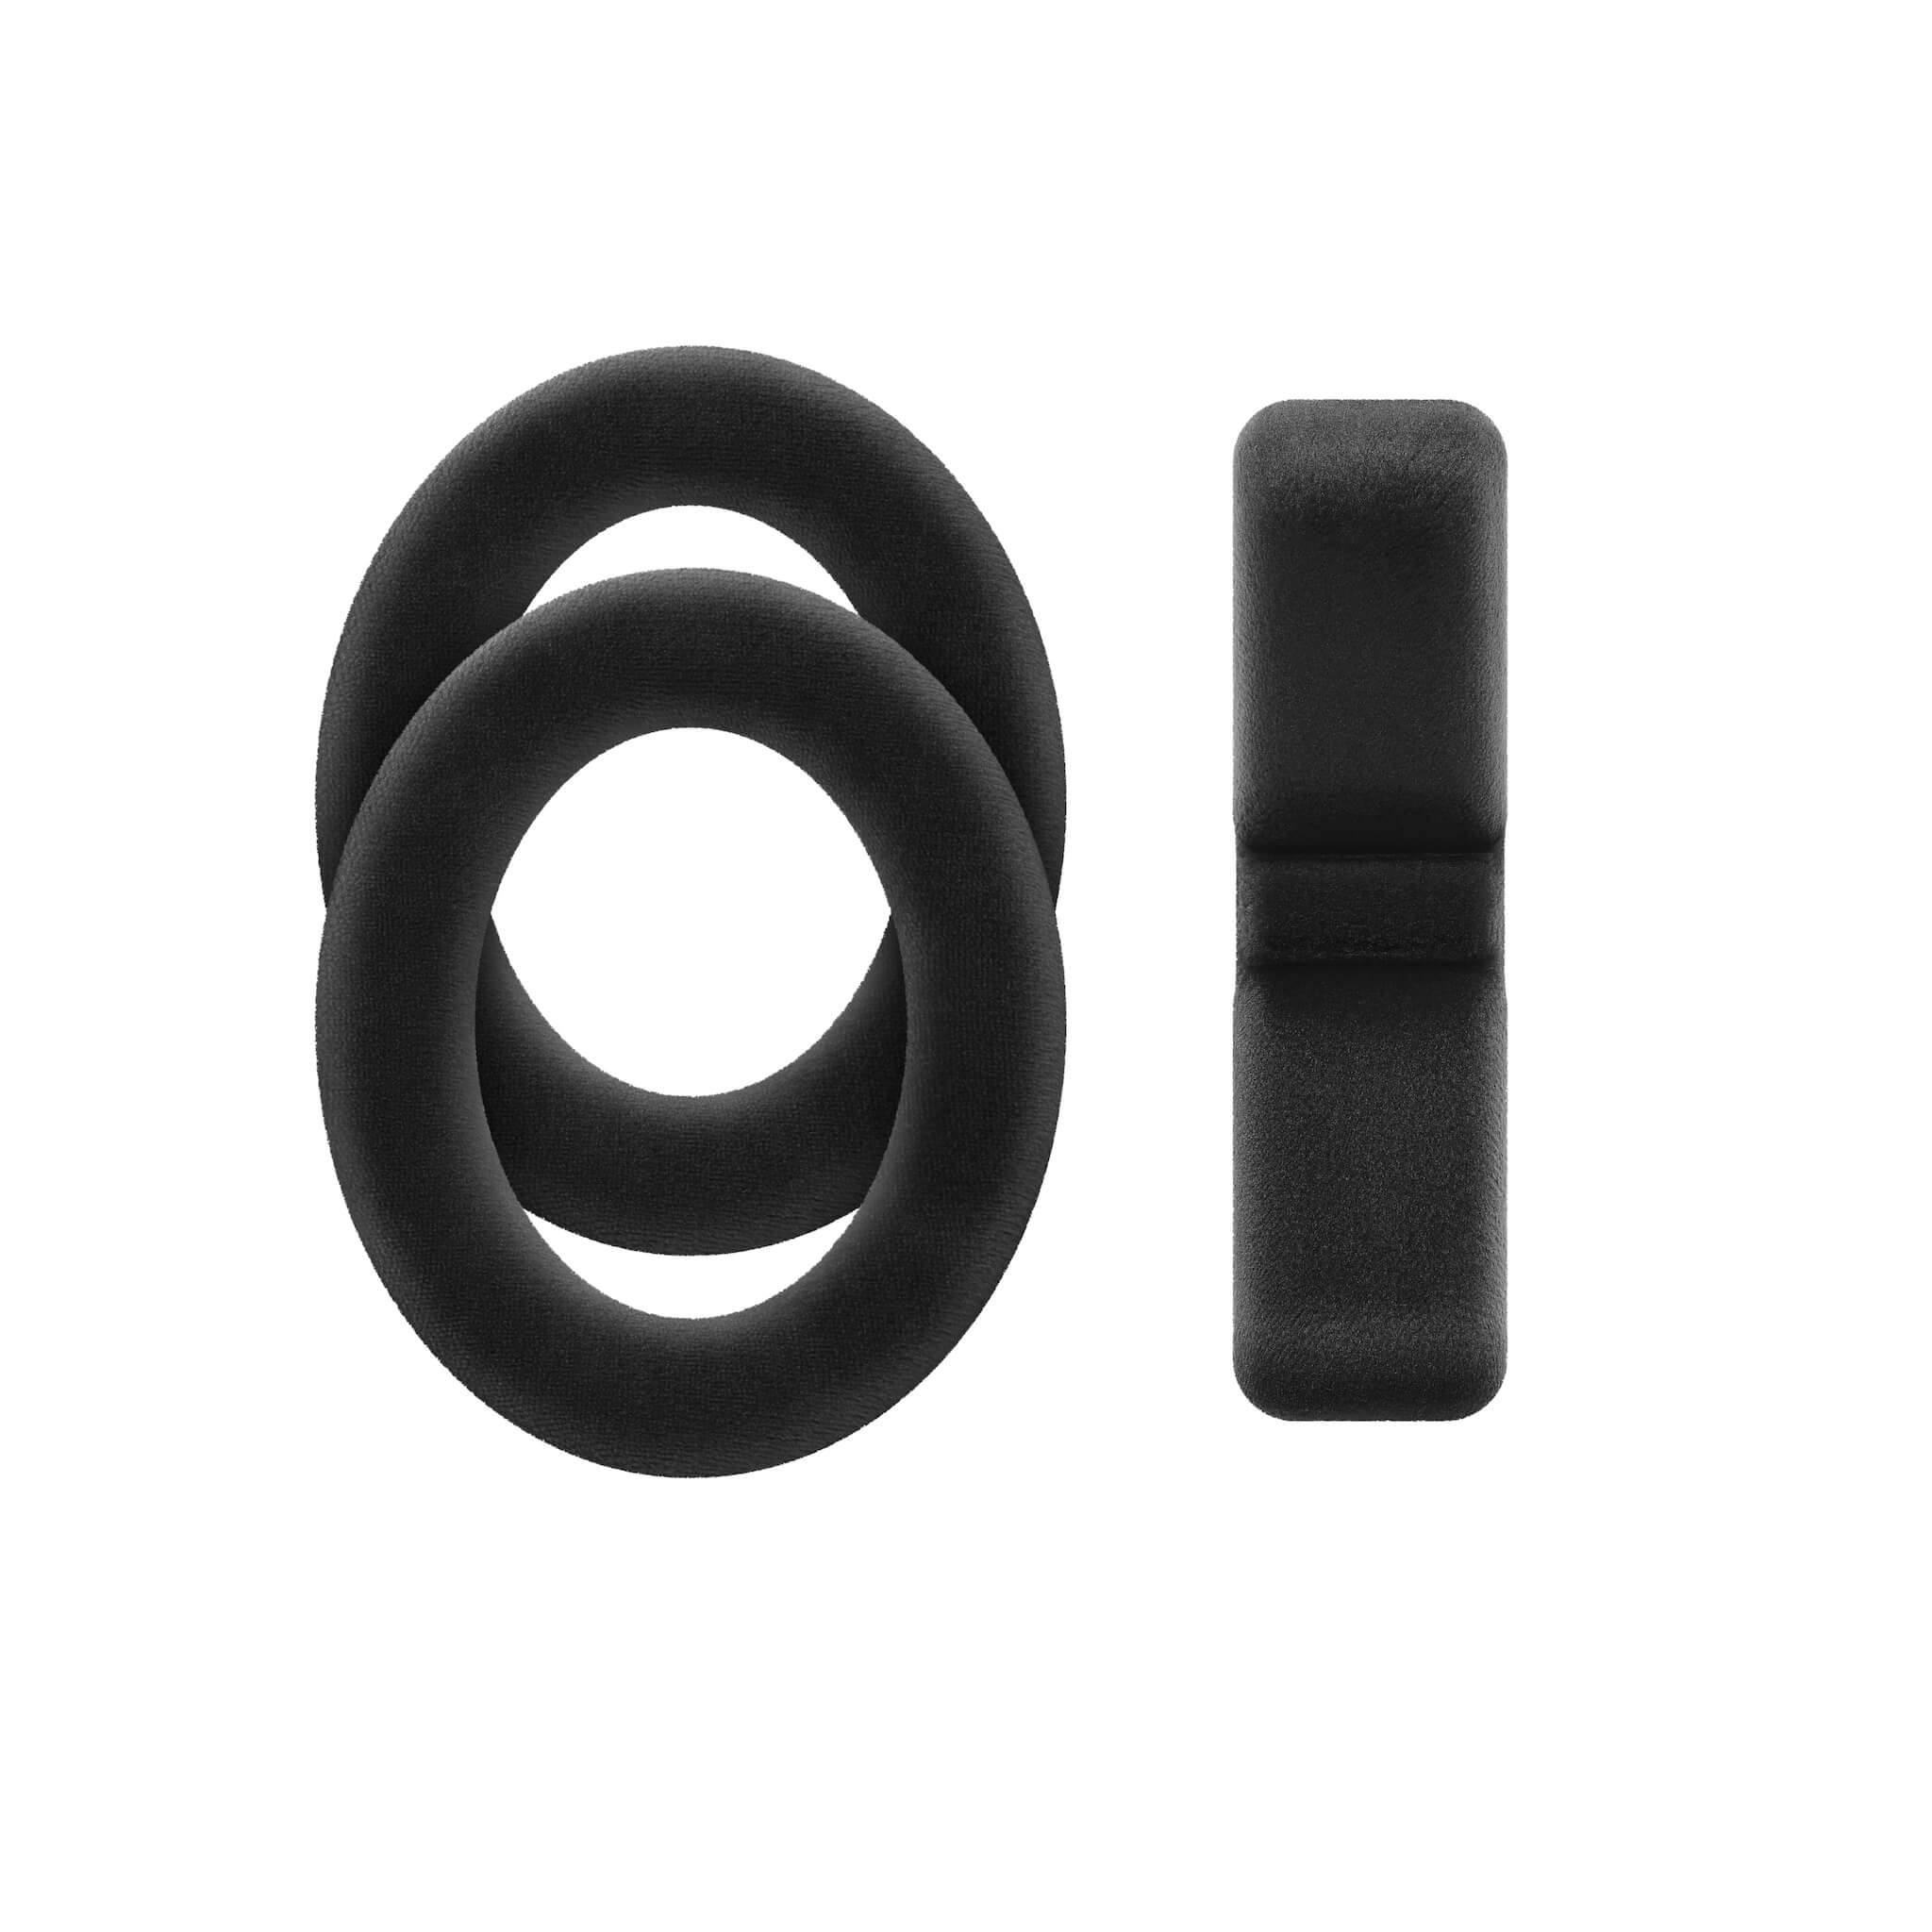 Sennheiser HD 490 PRO Plus - Professional Studio Reference Headphones, producing pads